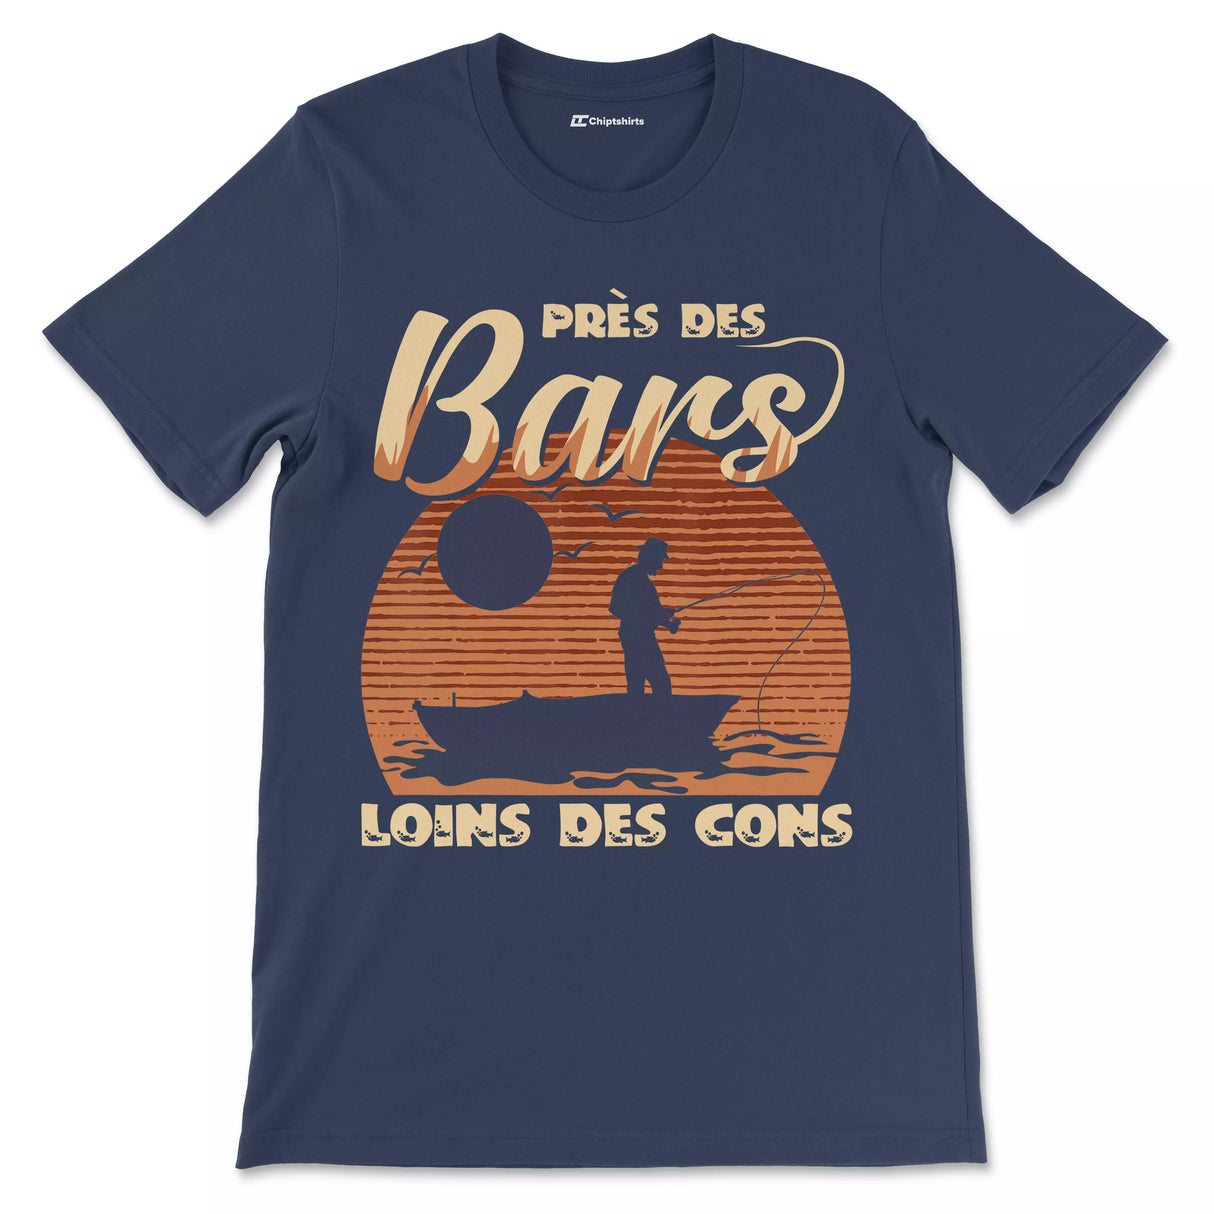 Men's Fisherman Humor Gift, Bass Fishing, Funny Fisherman T-shirt, Near the Bars Far from the Cons